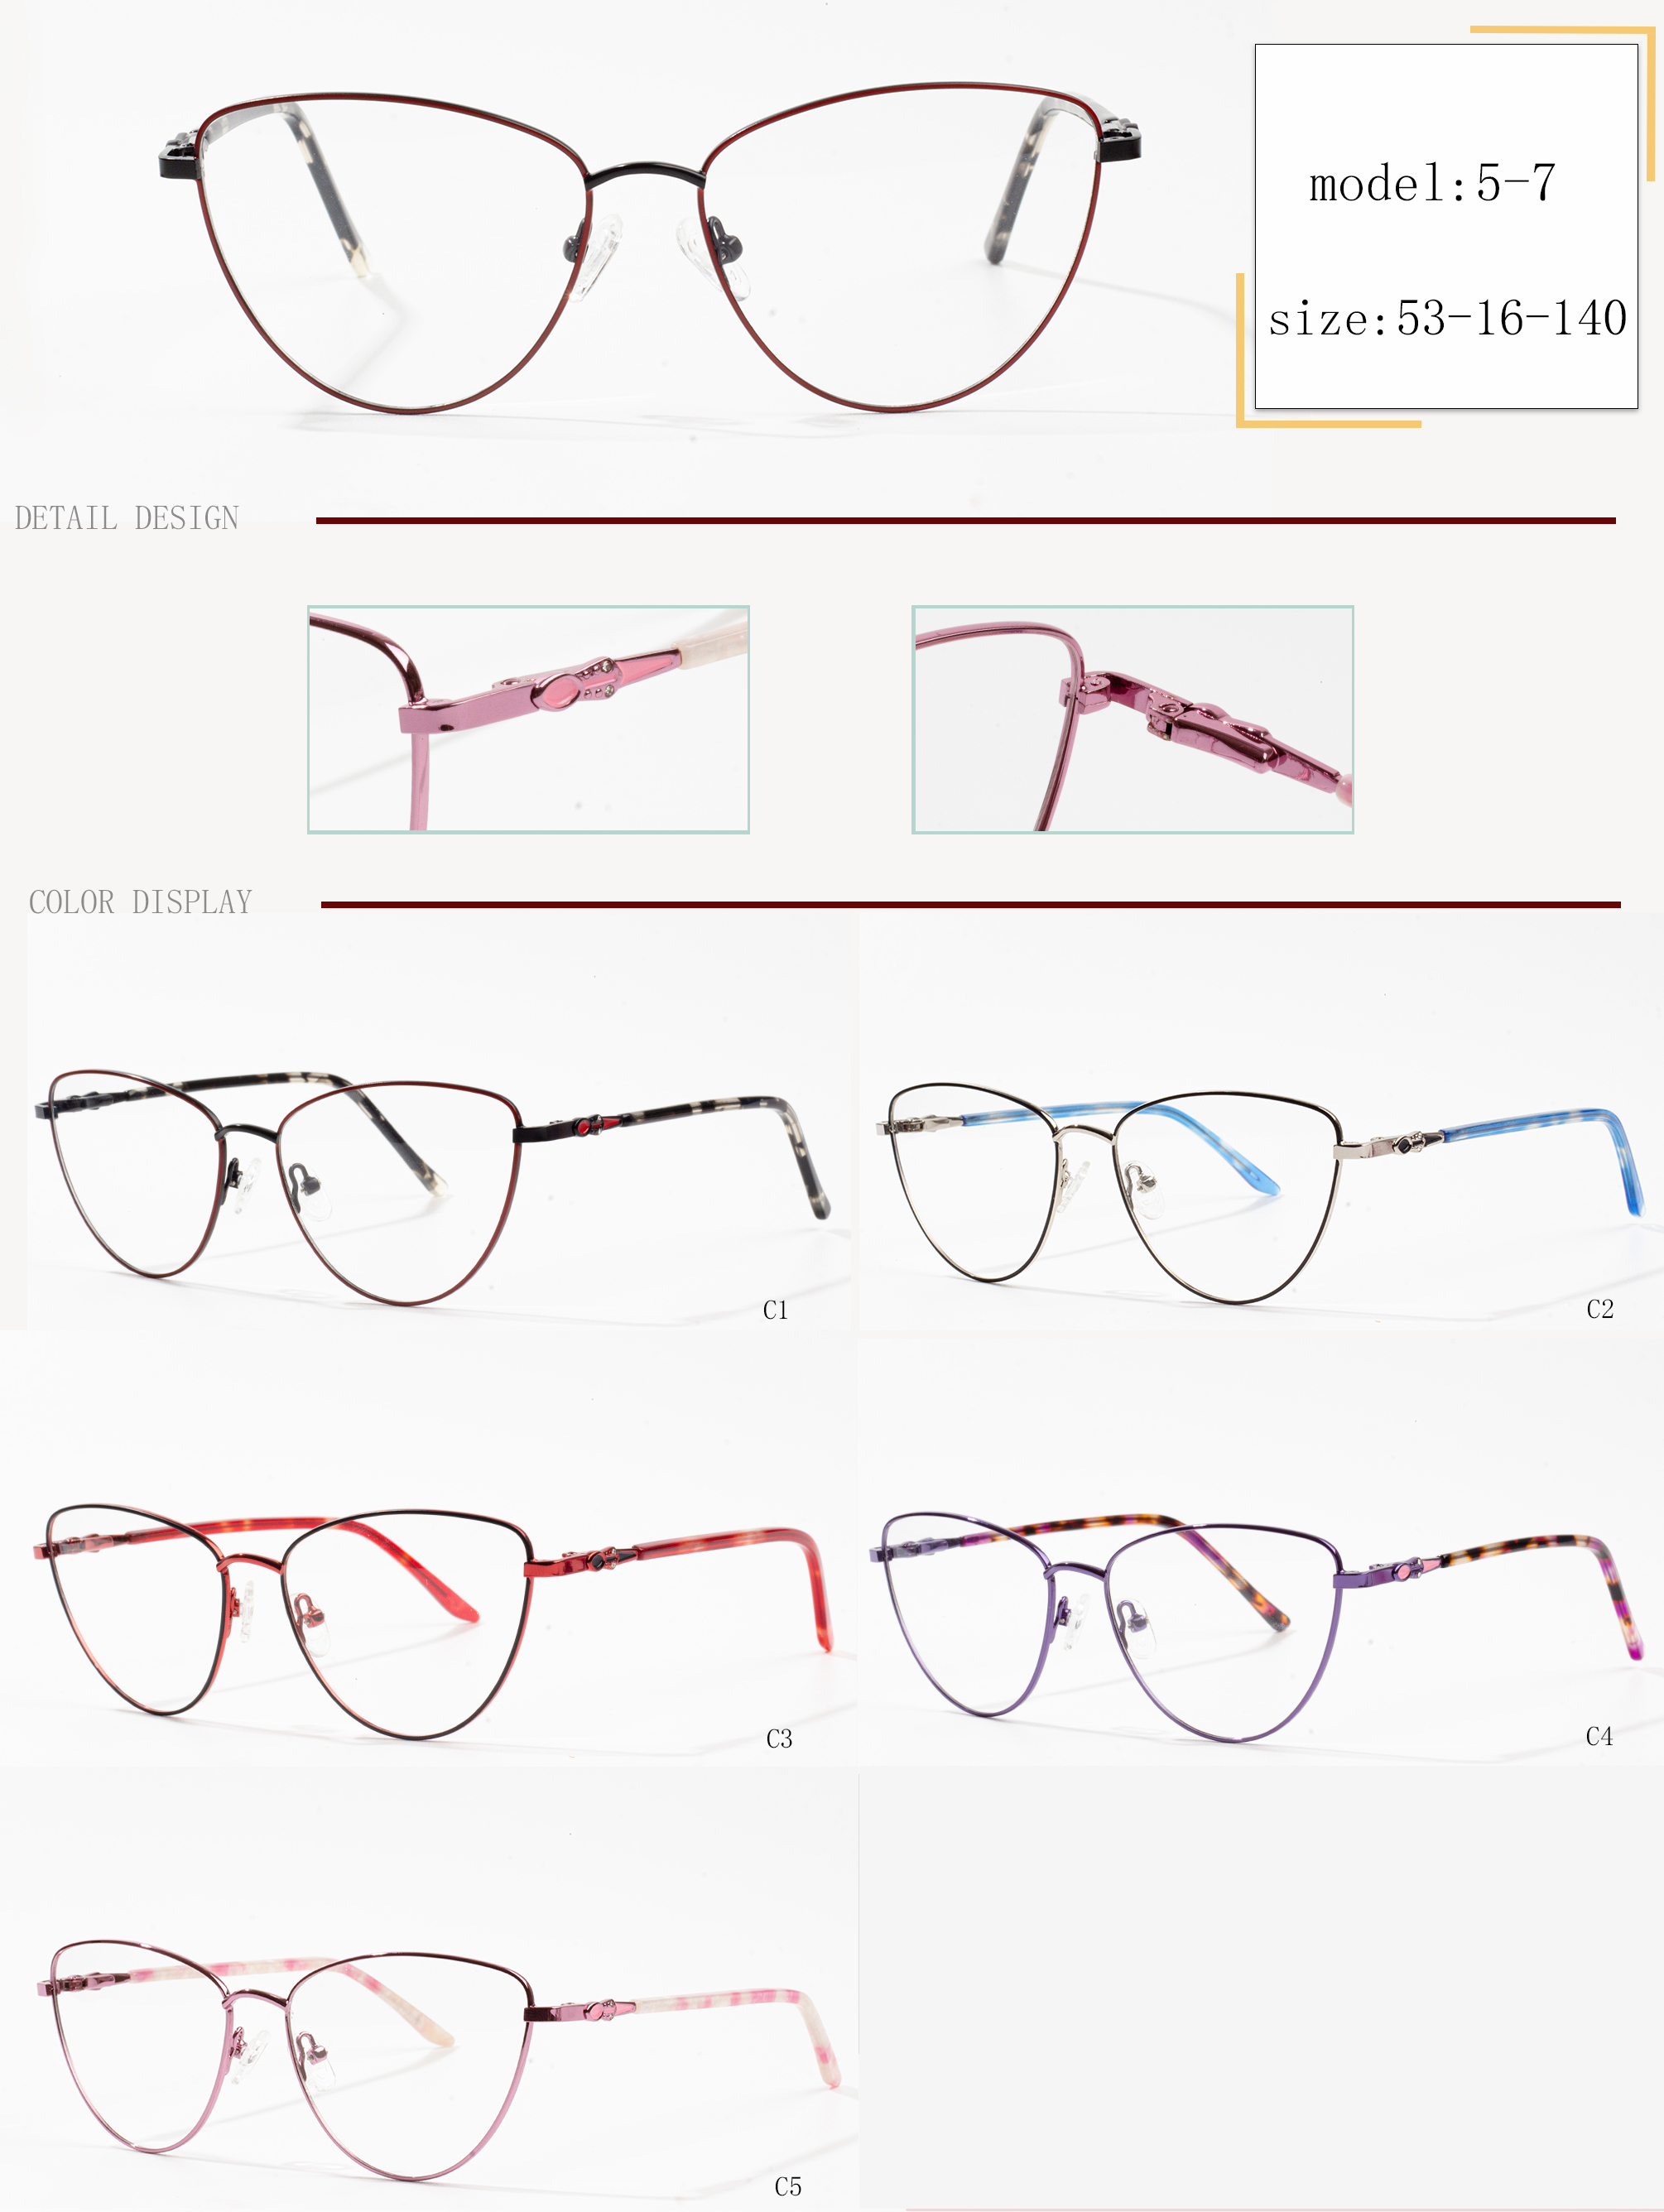 Seiko eyeglass tabulas